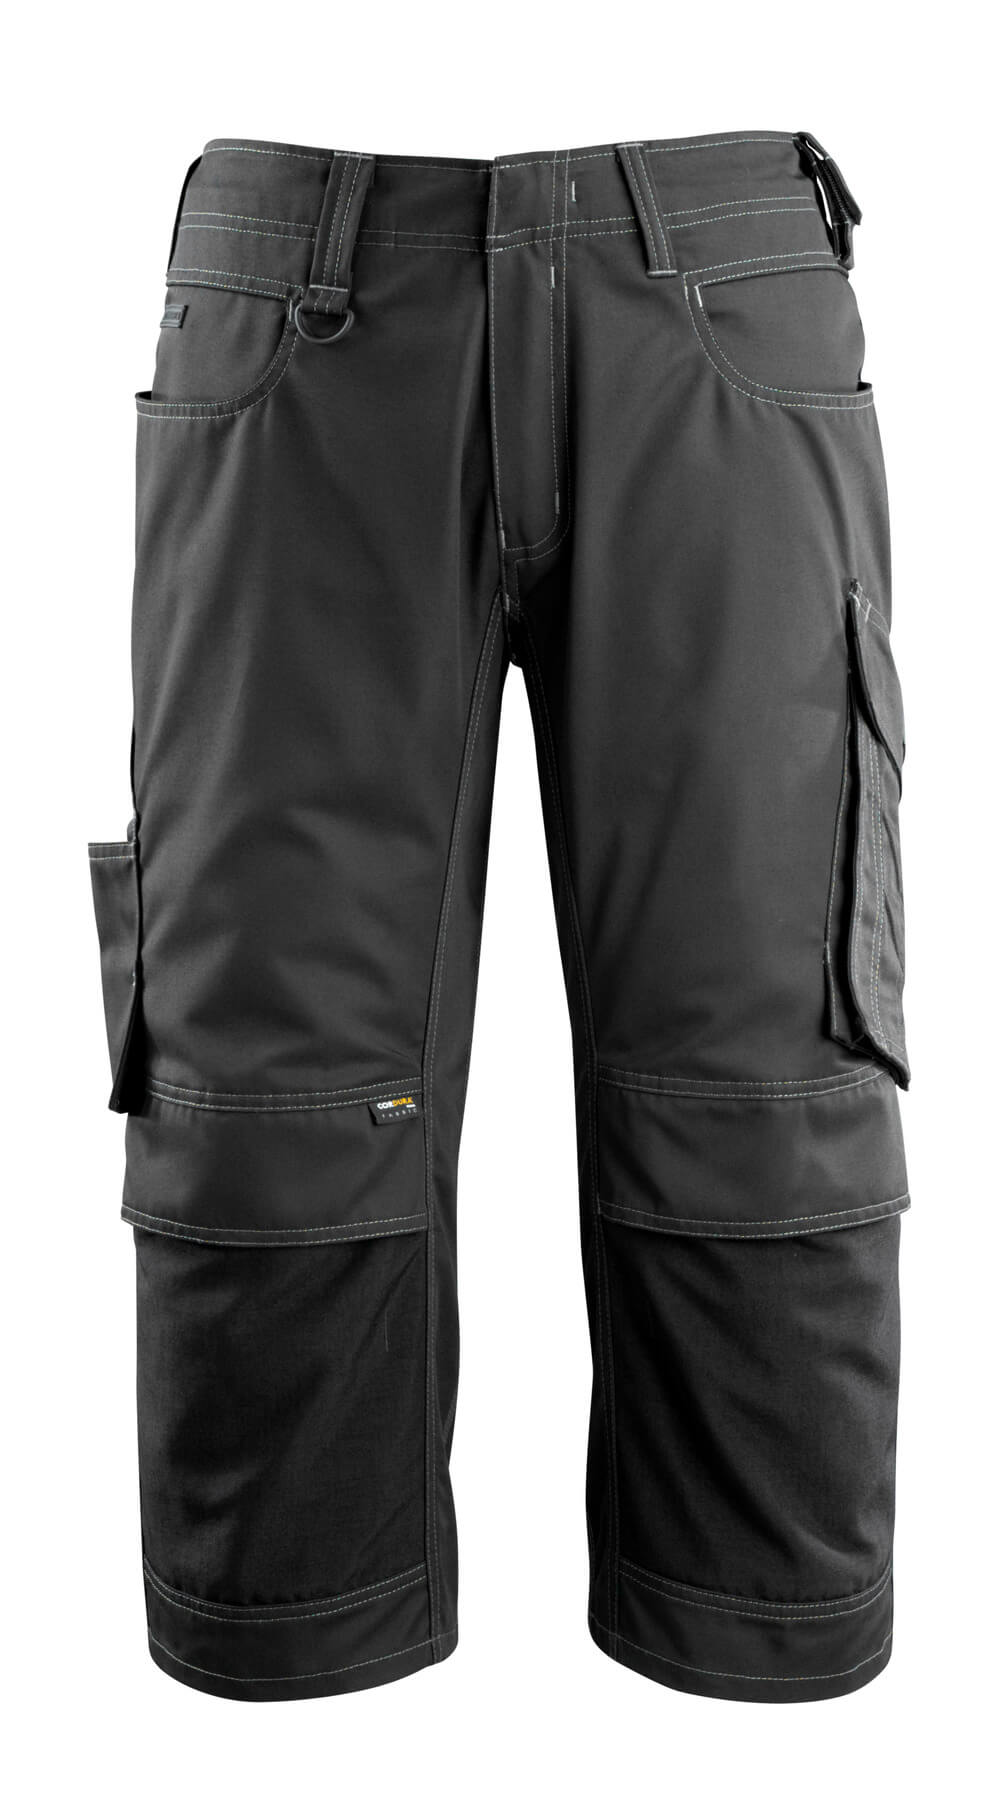 MASCOT®UNIQUE ¾ Length Trousers with kneepad pockets Altona 14249 - DaltonSafety